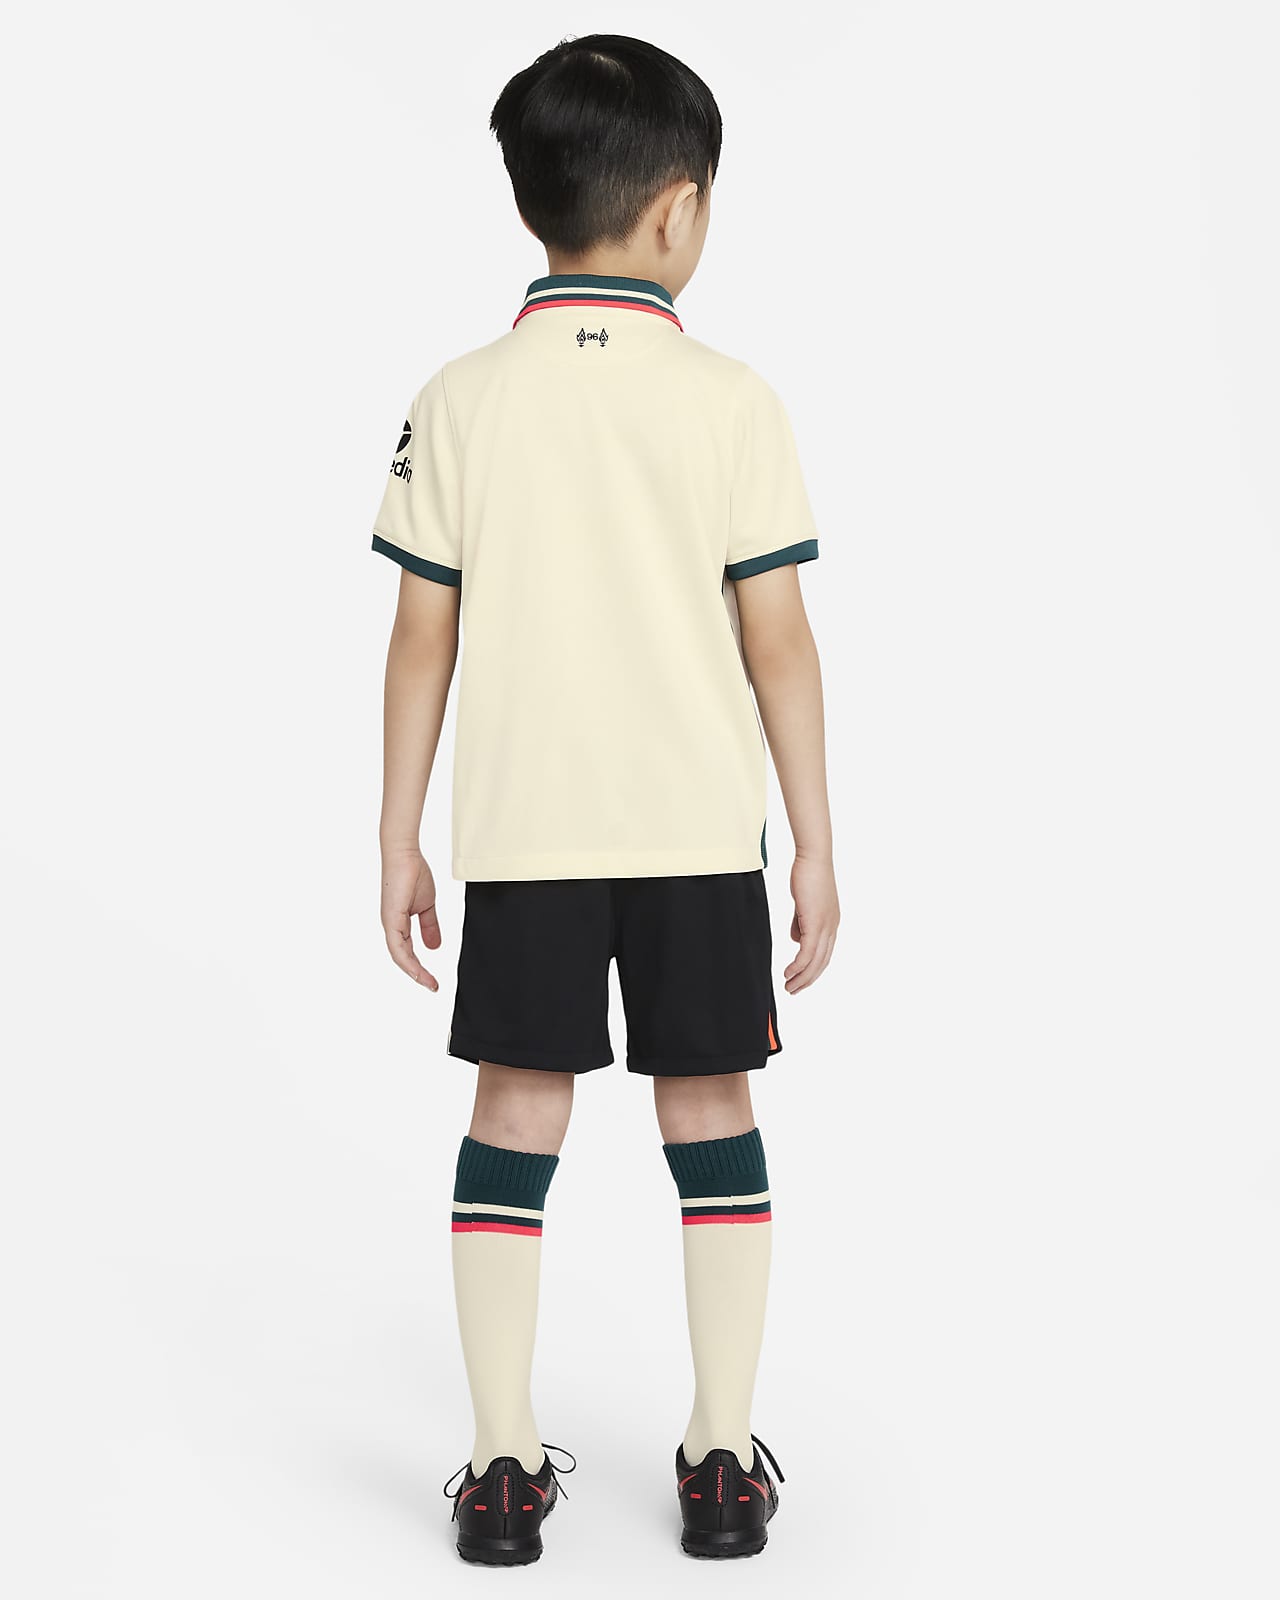 Younger Kids' Football Kit. Nike 